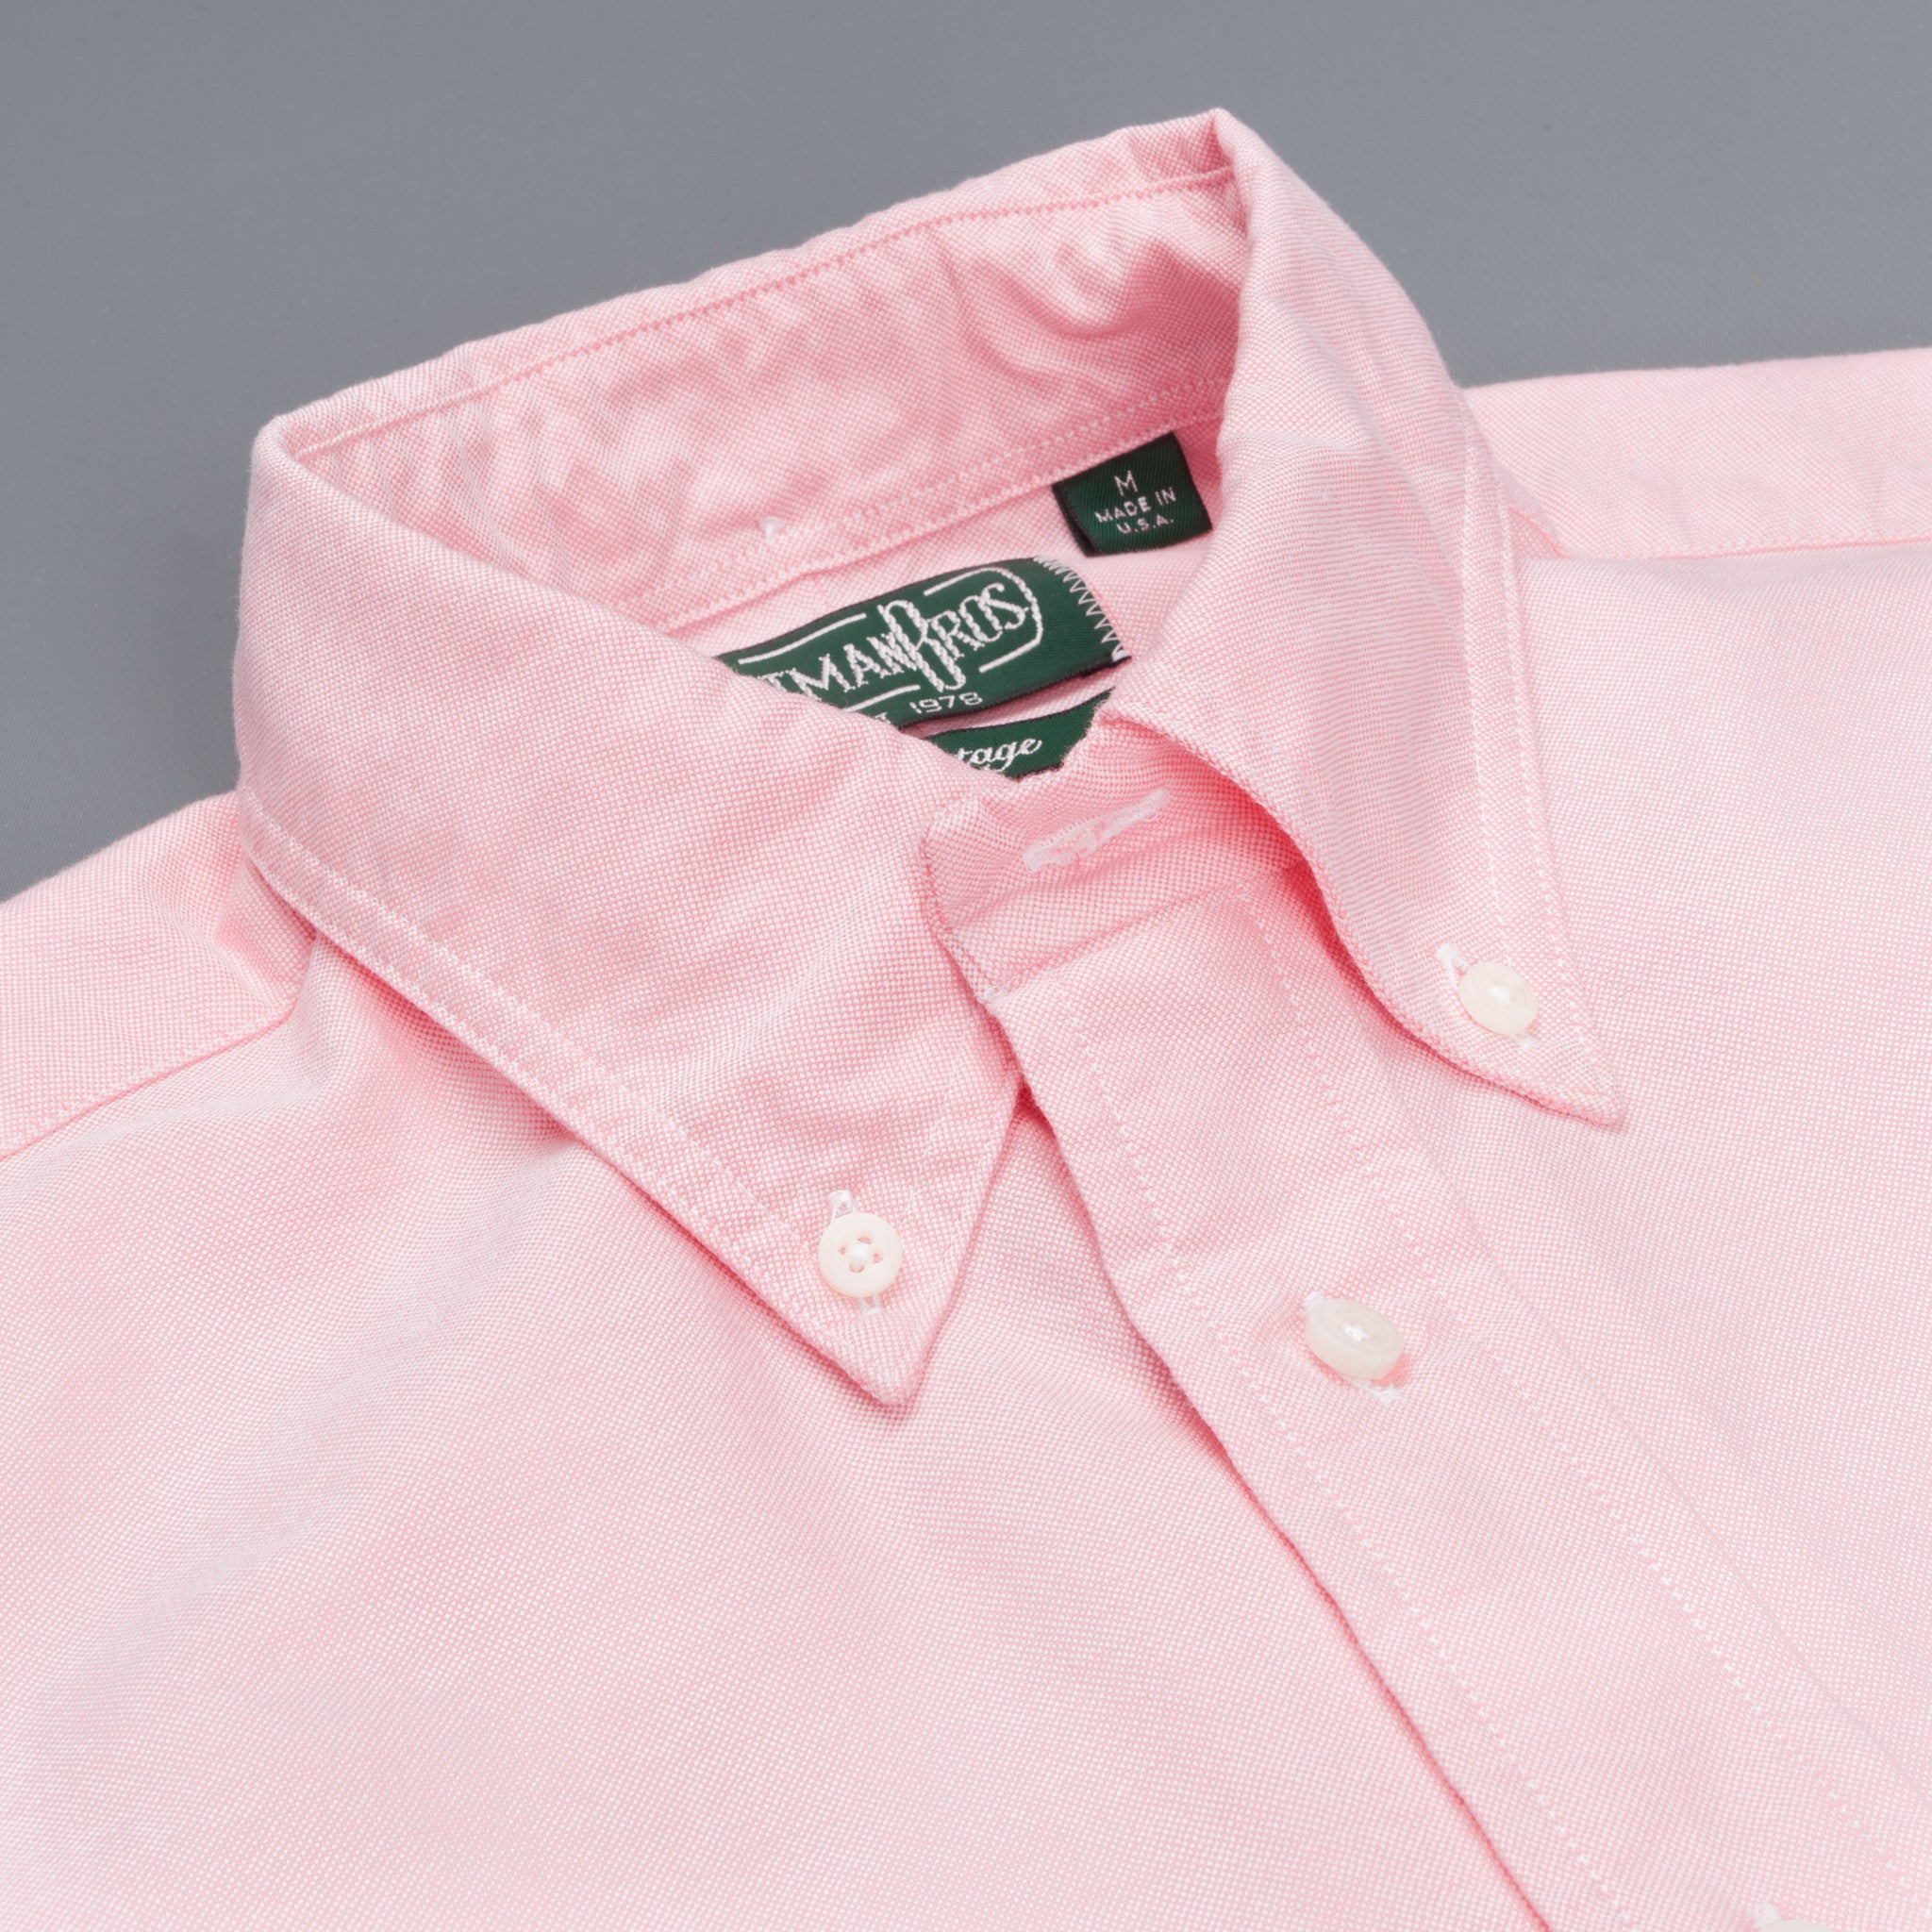 Gitman Vintage Button-Down Shirt Oxford Muted Pink